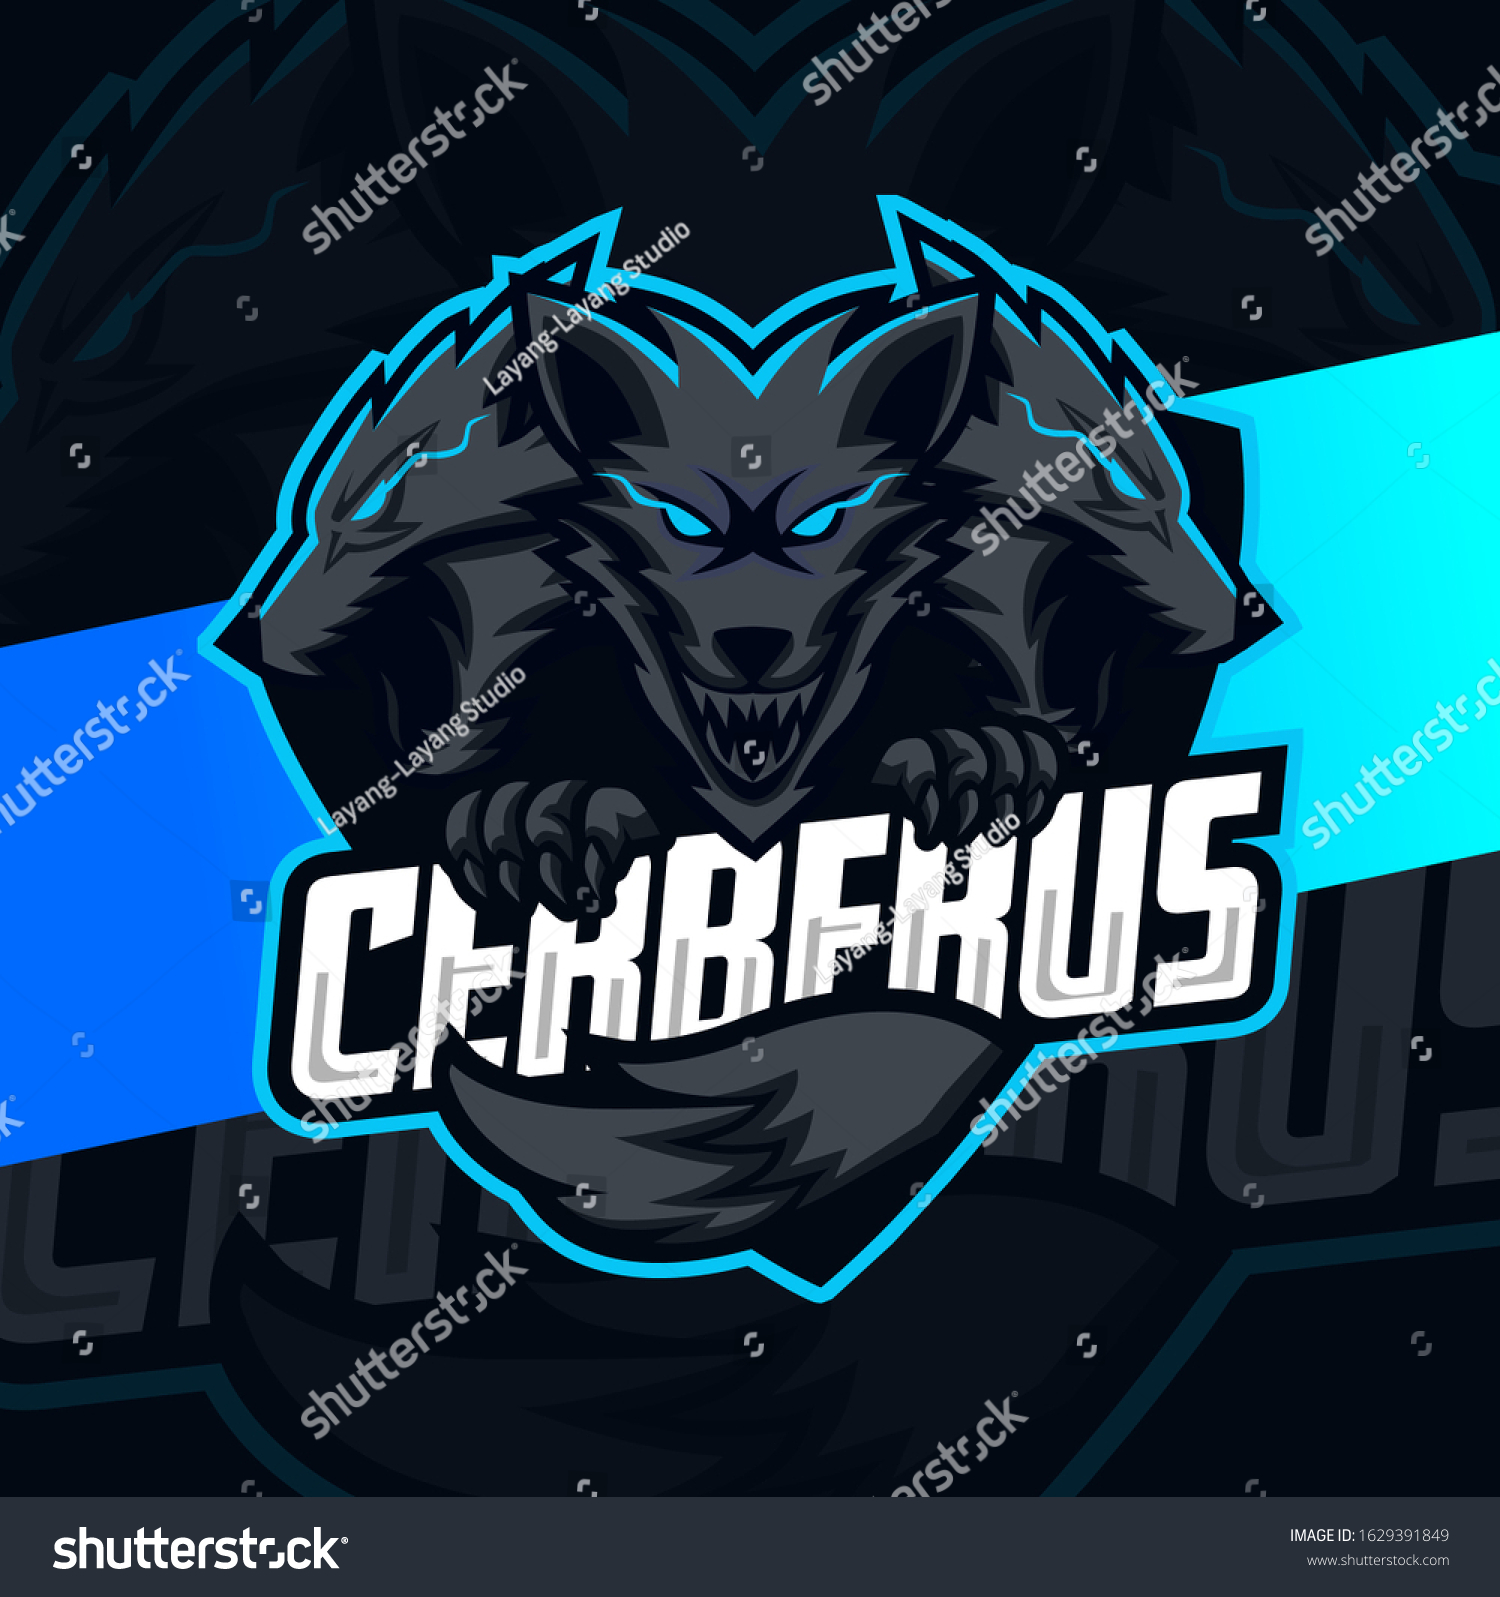 SVG of cerberus mascot esport logo design svg